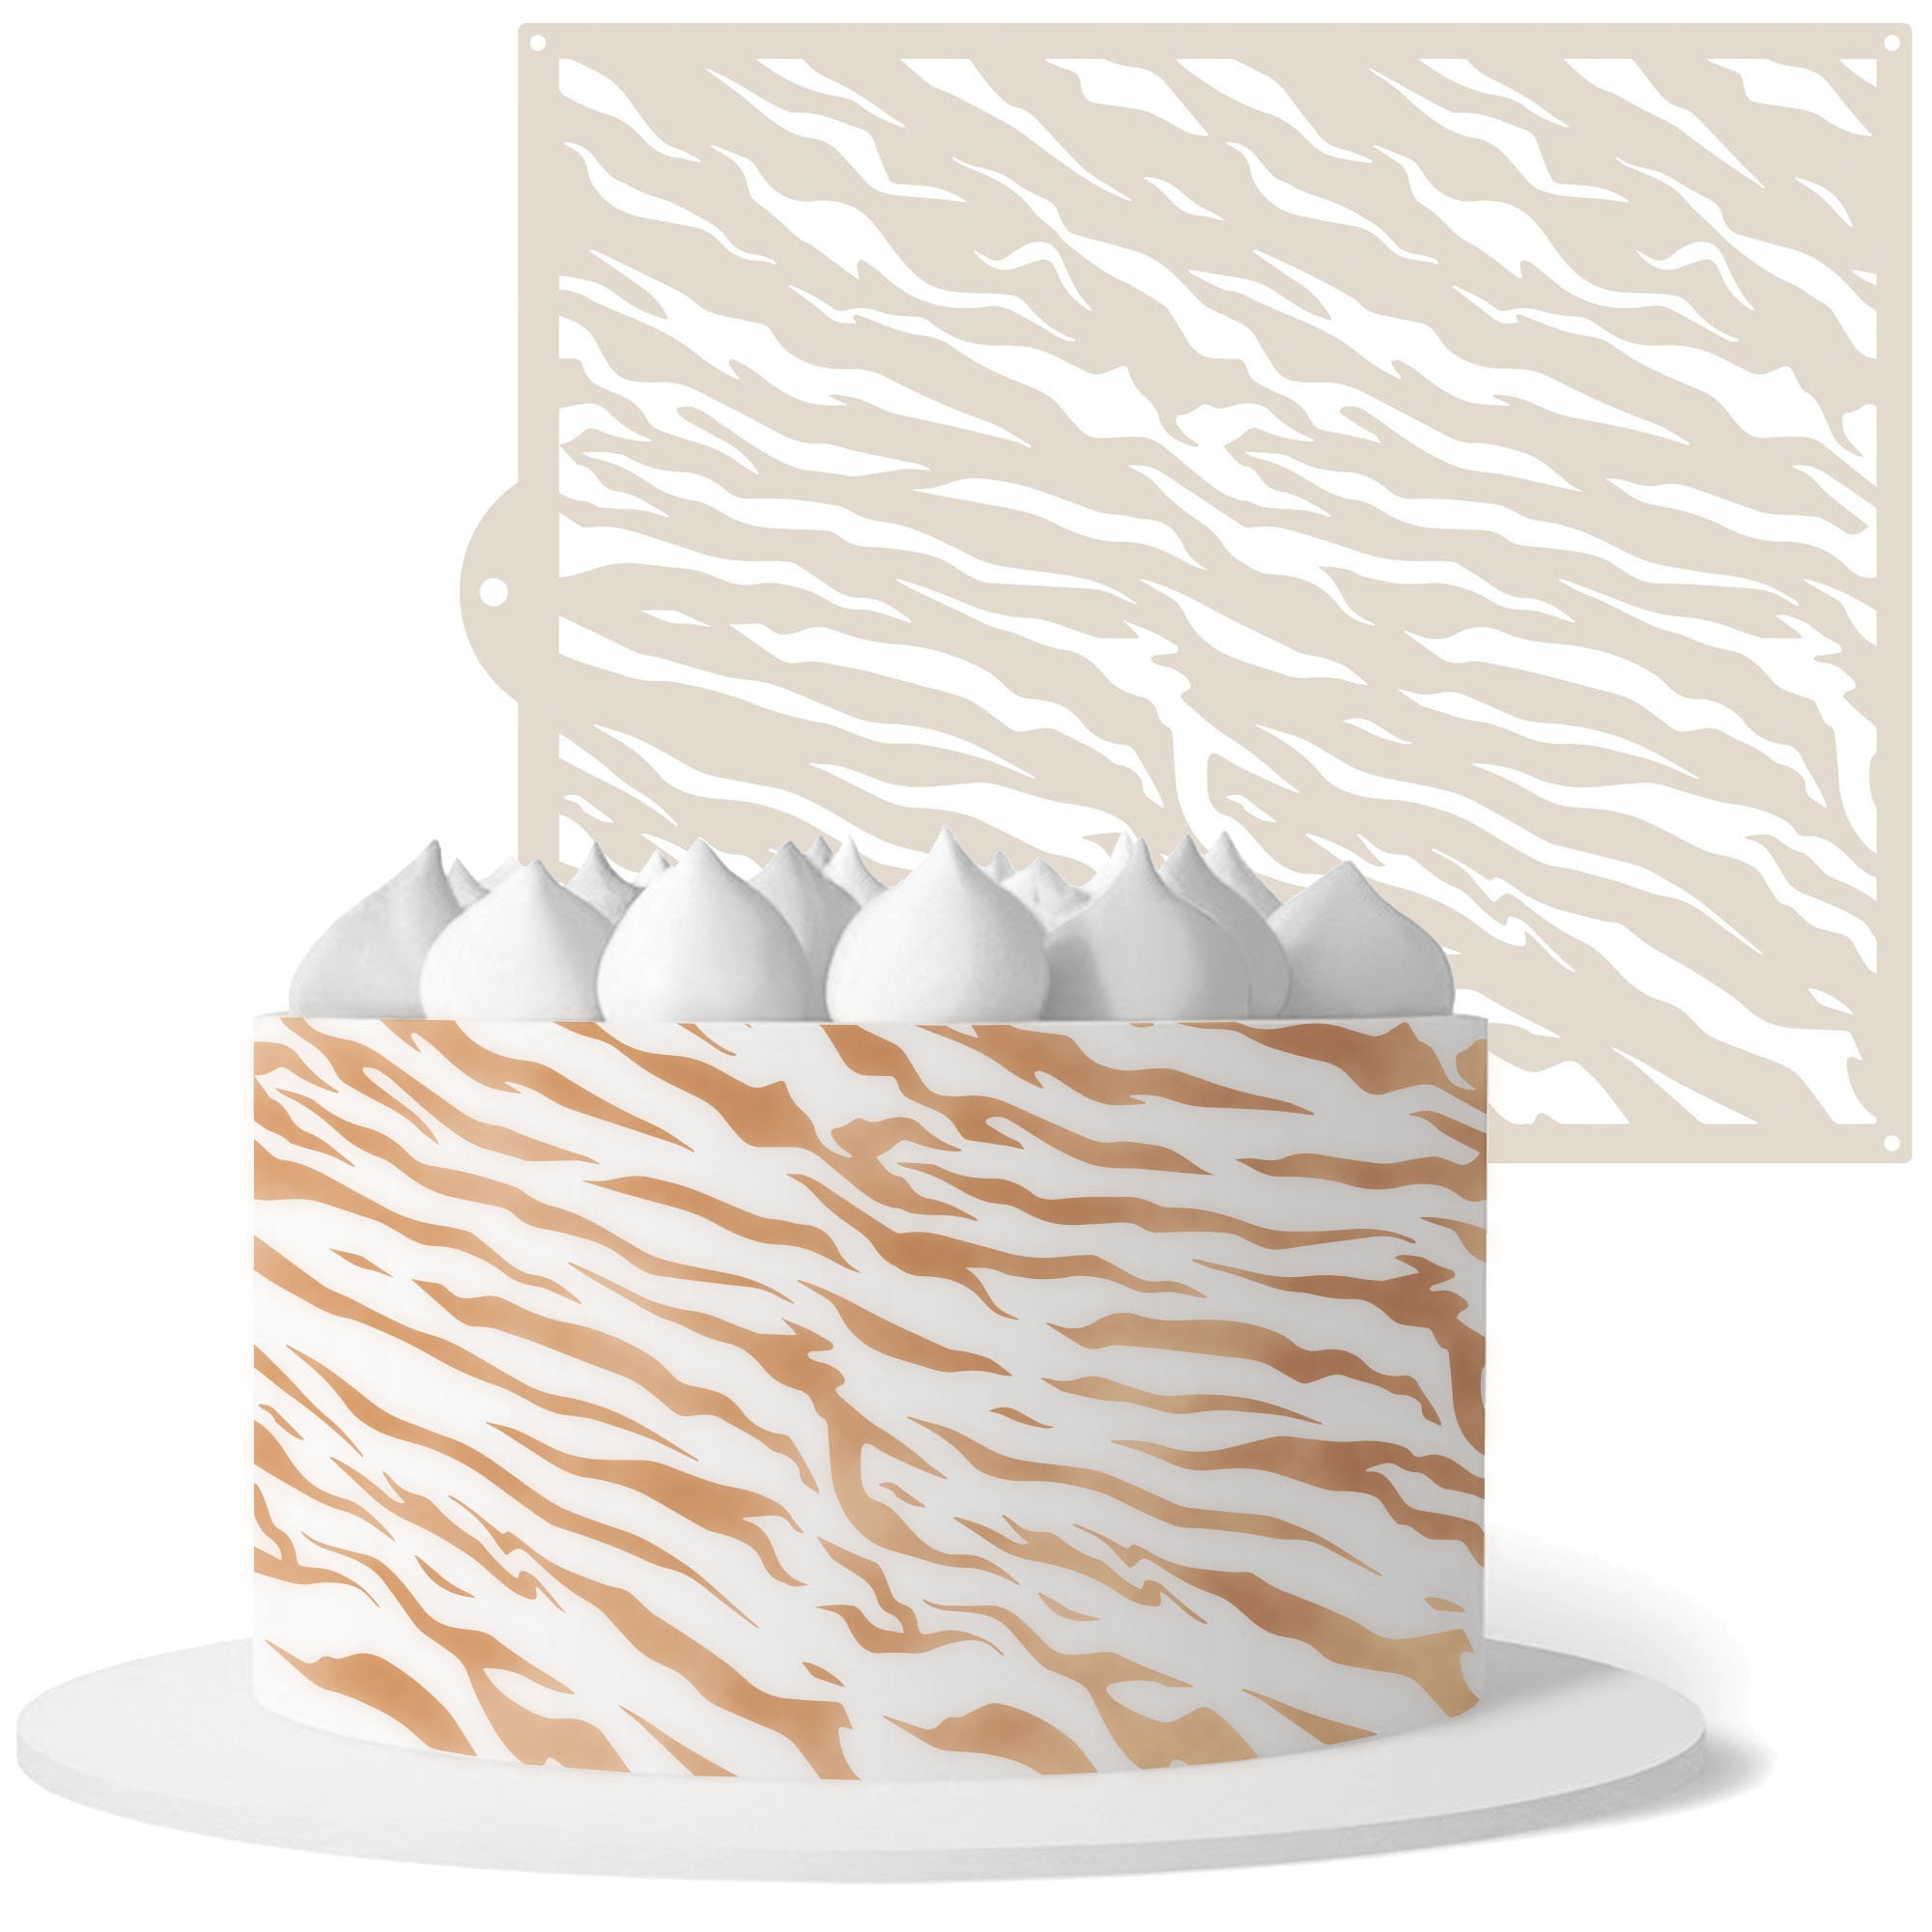 Duff Goldman Cake Decorating Airbrush Machine Air Brush Kit 12